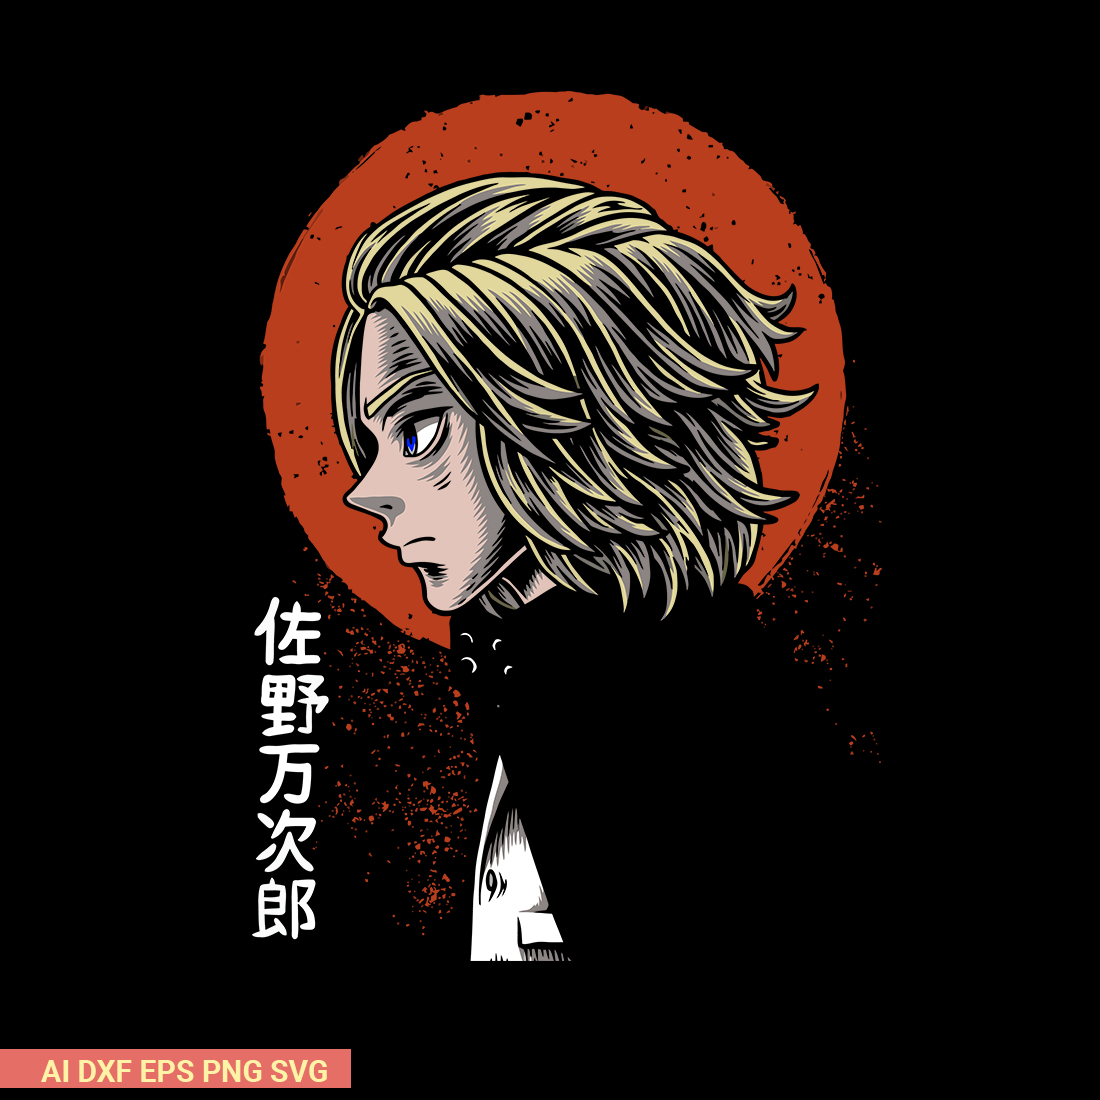 Tokyo Revengers Anime SVG preview image.